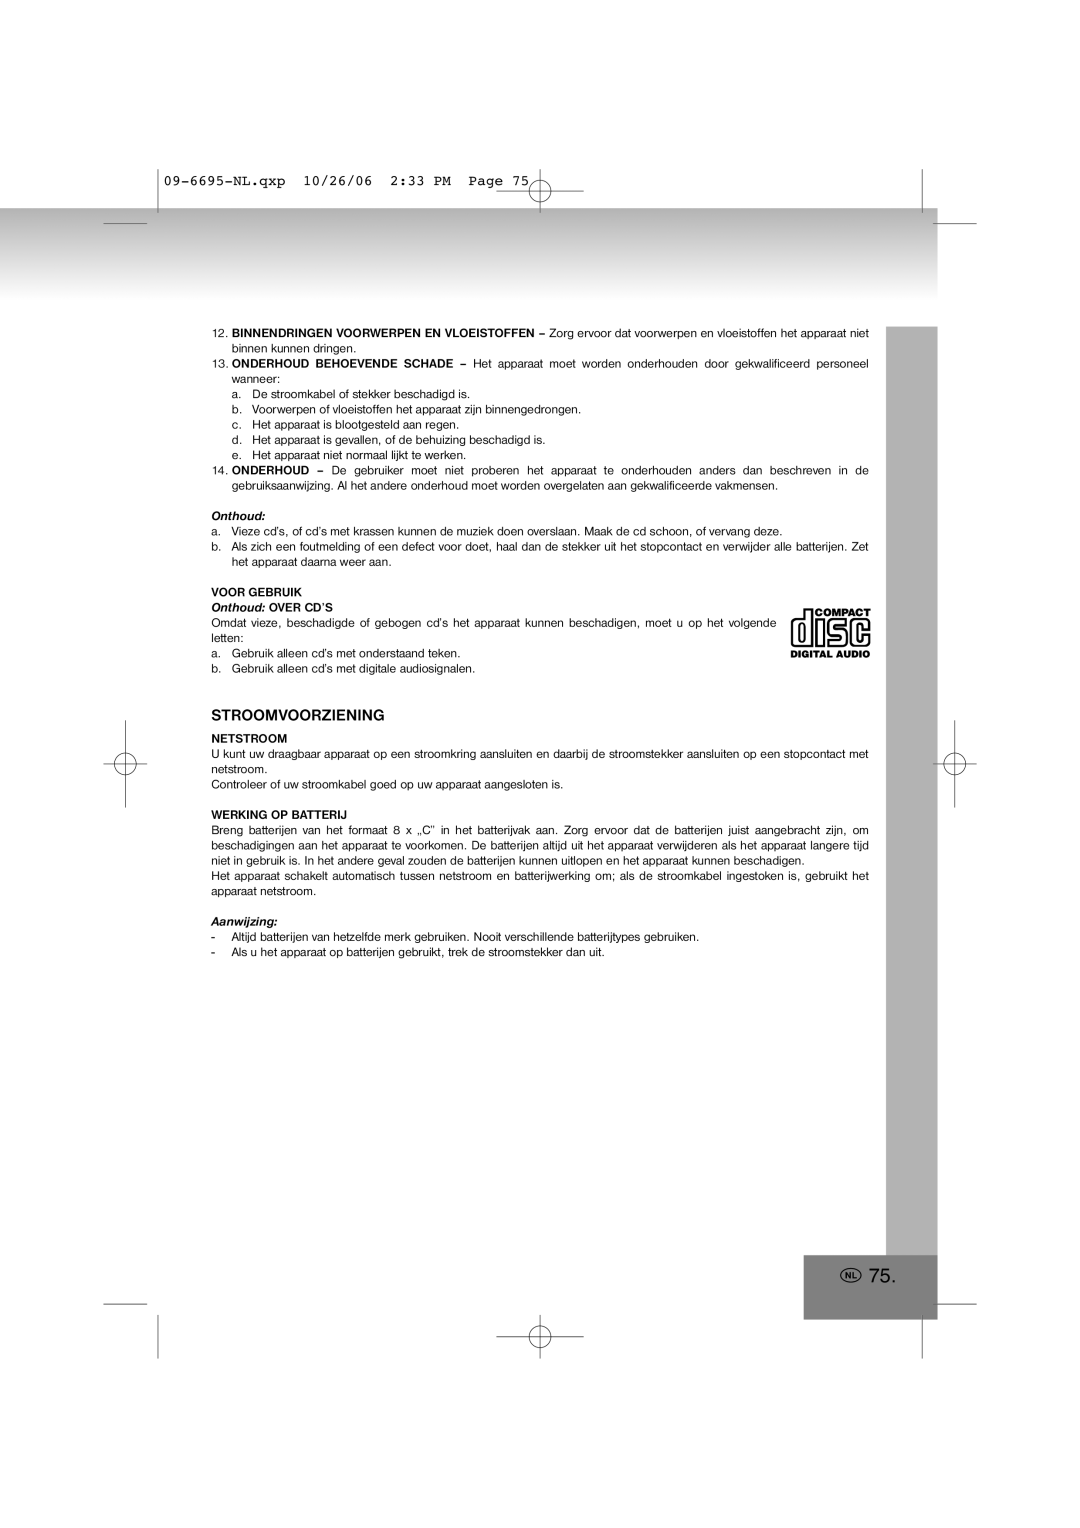 Elta manual Stroomvoorziening, 09-6695-NL.qxp10/26/06 2 33 PM Page, Onthoud OVER CD’S, Aanwijzing 